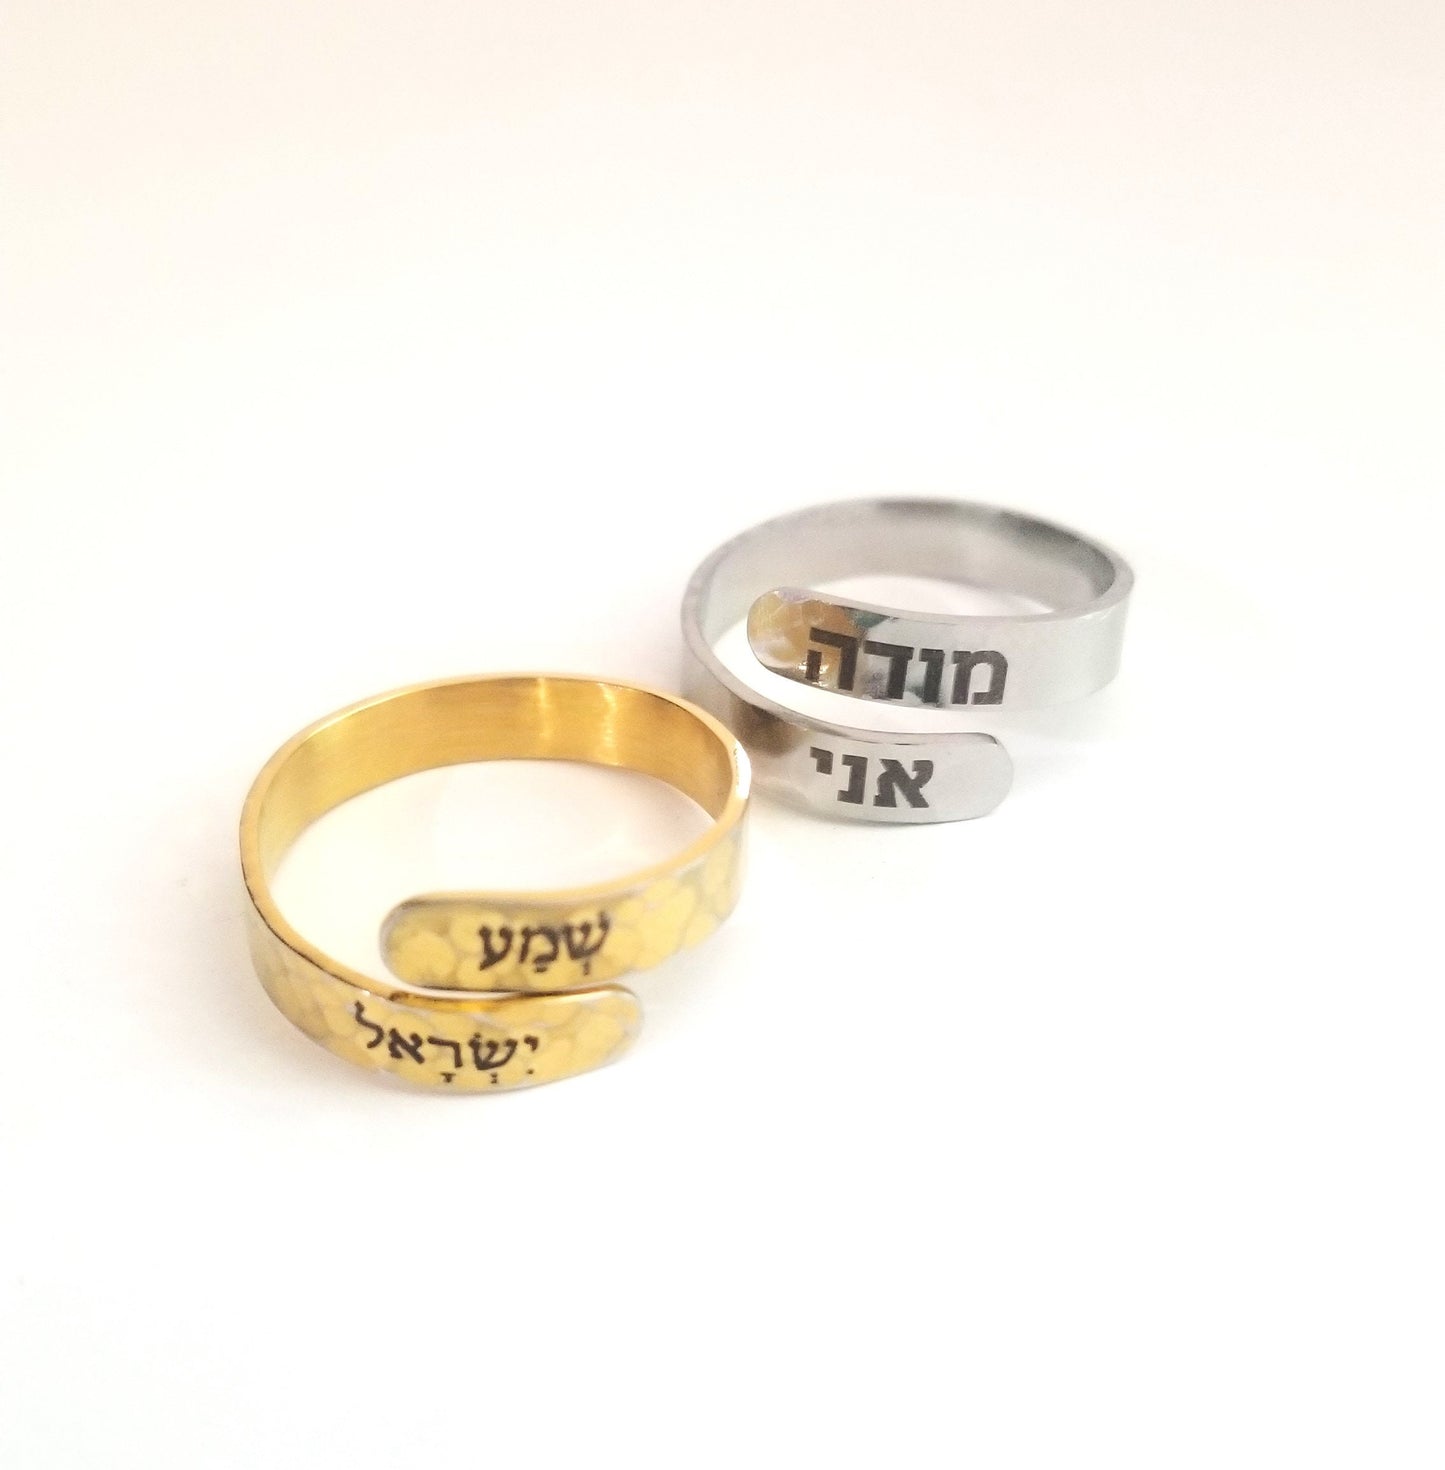 Modeh Ani Jewish prayer Hebrew ring, Thankful Judaica jewelry gift, Biblical verse blessing ring, Thin wraparound silver adjustable ring